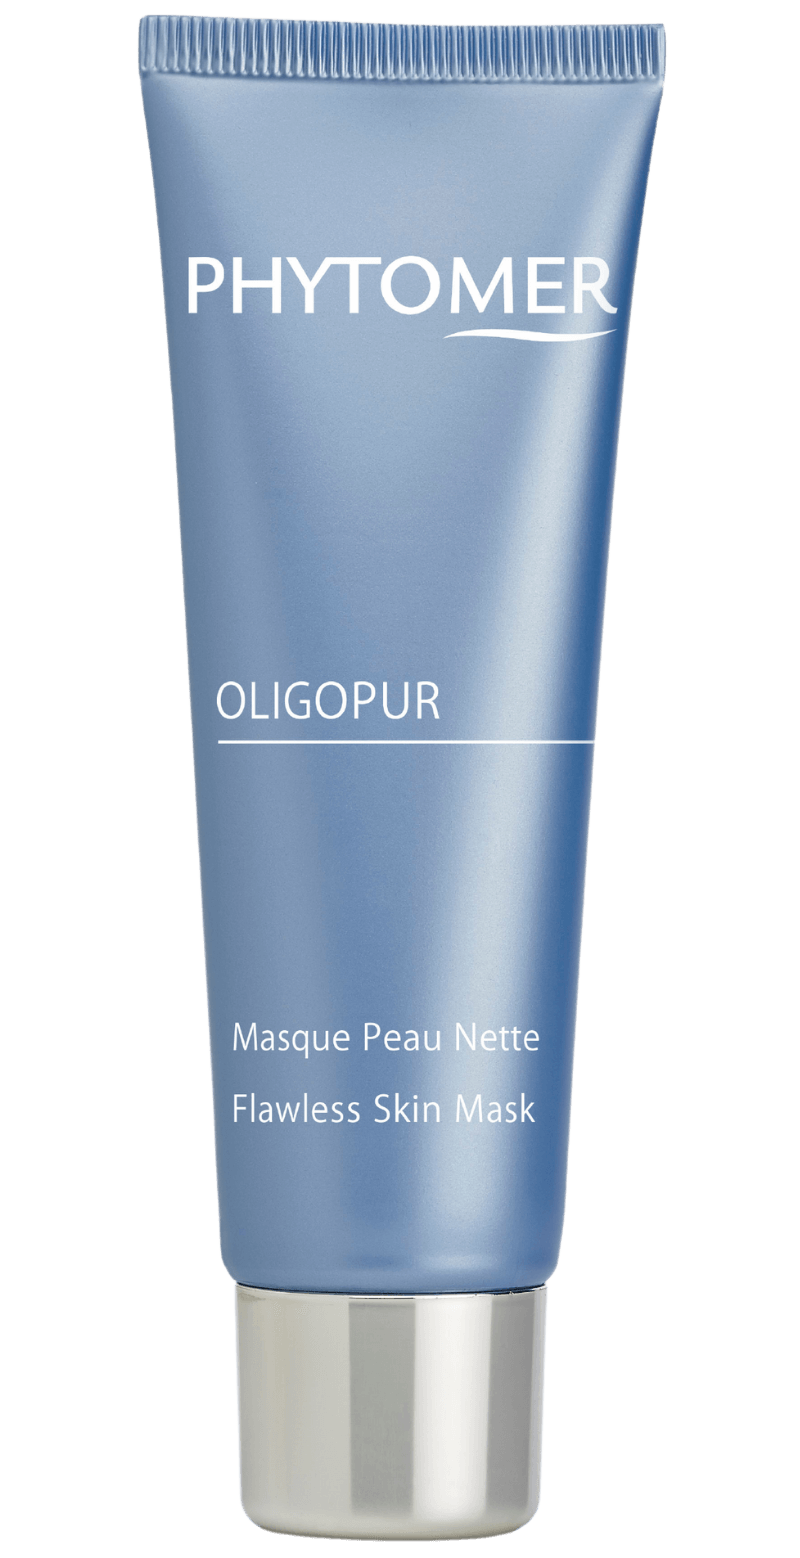 's Phytomer OLIGOPUR Flawless Skin Mask - Bellini's Skin and Parfumerie 